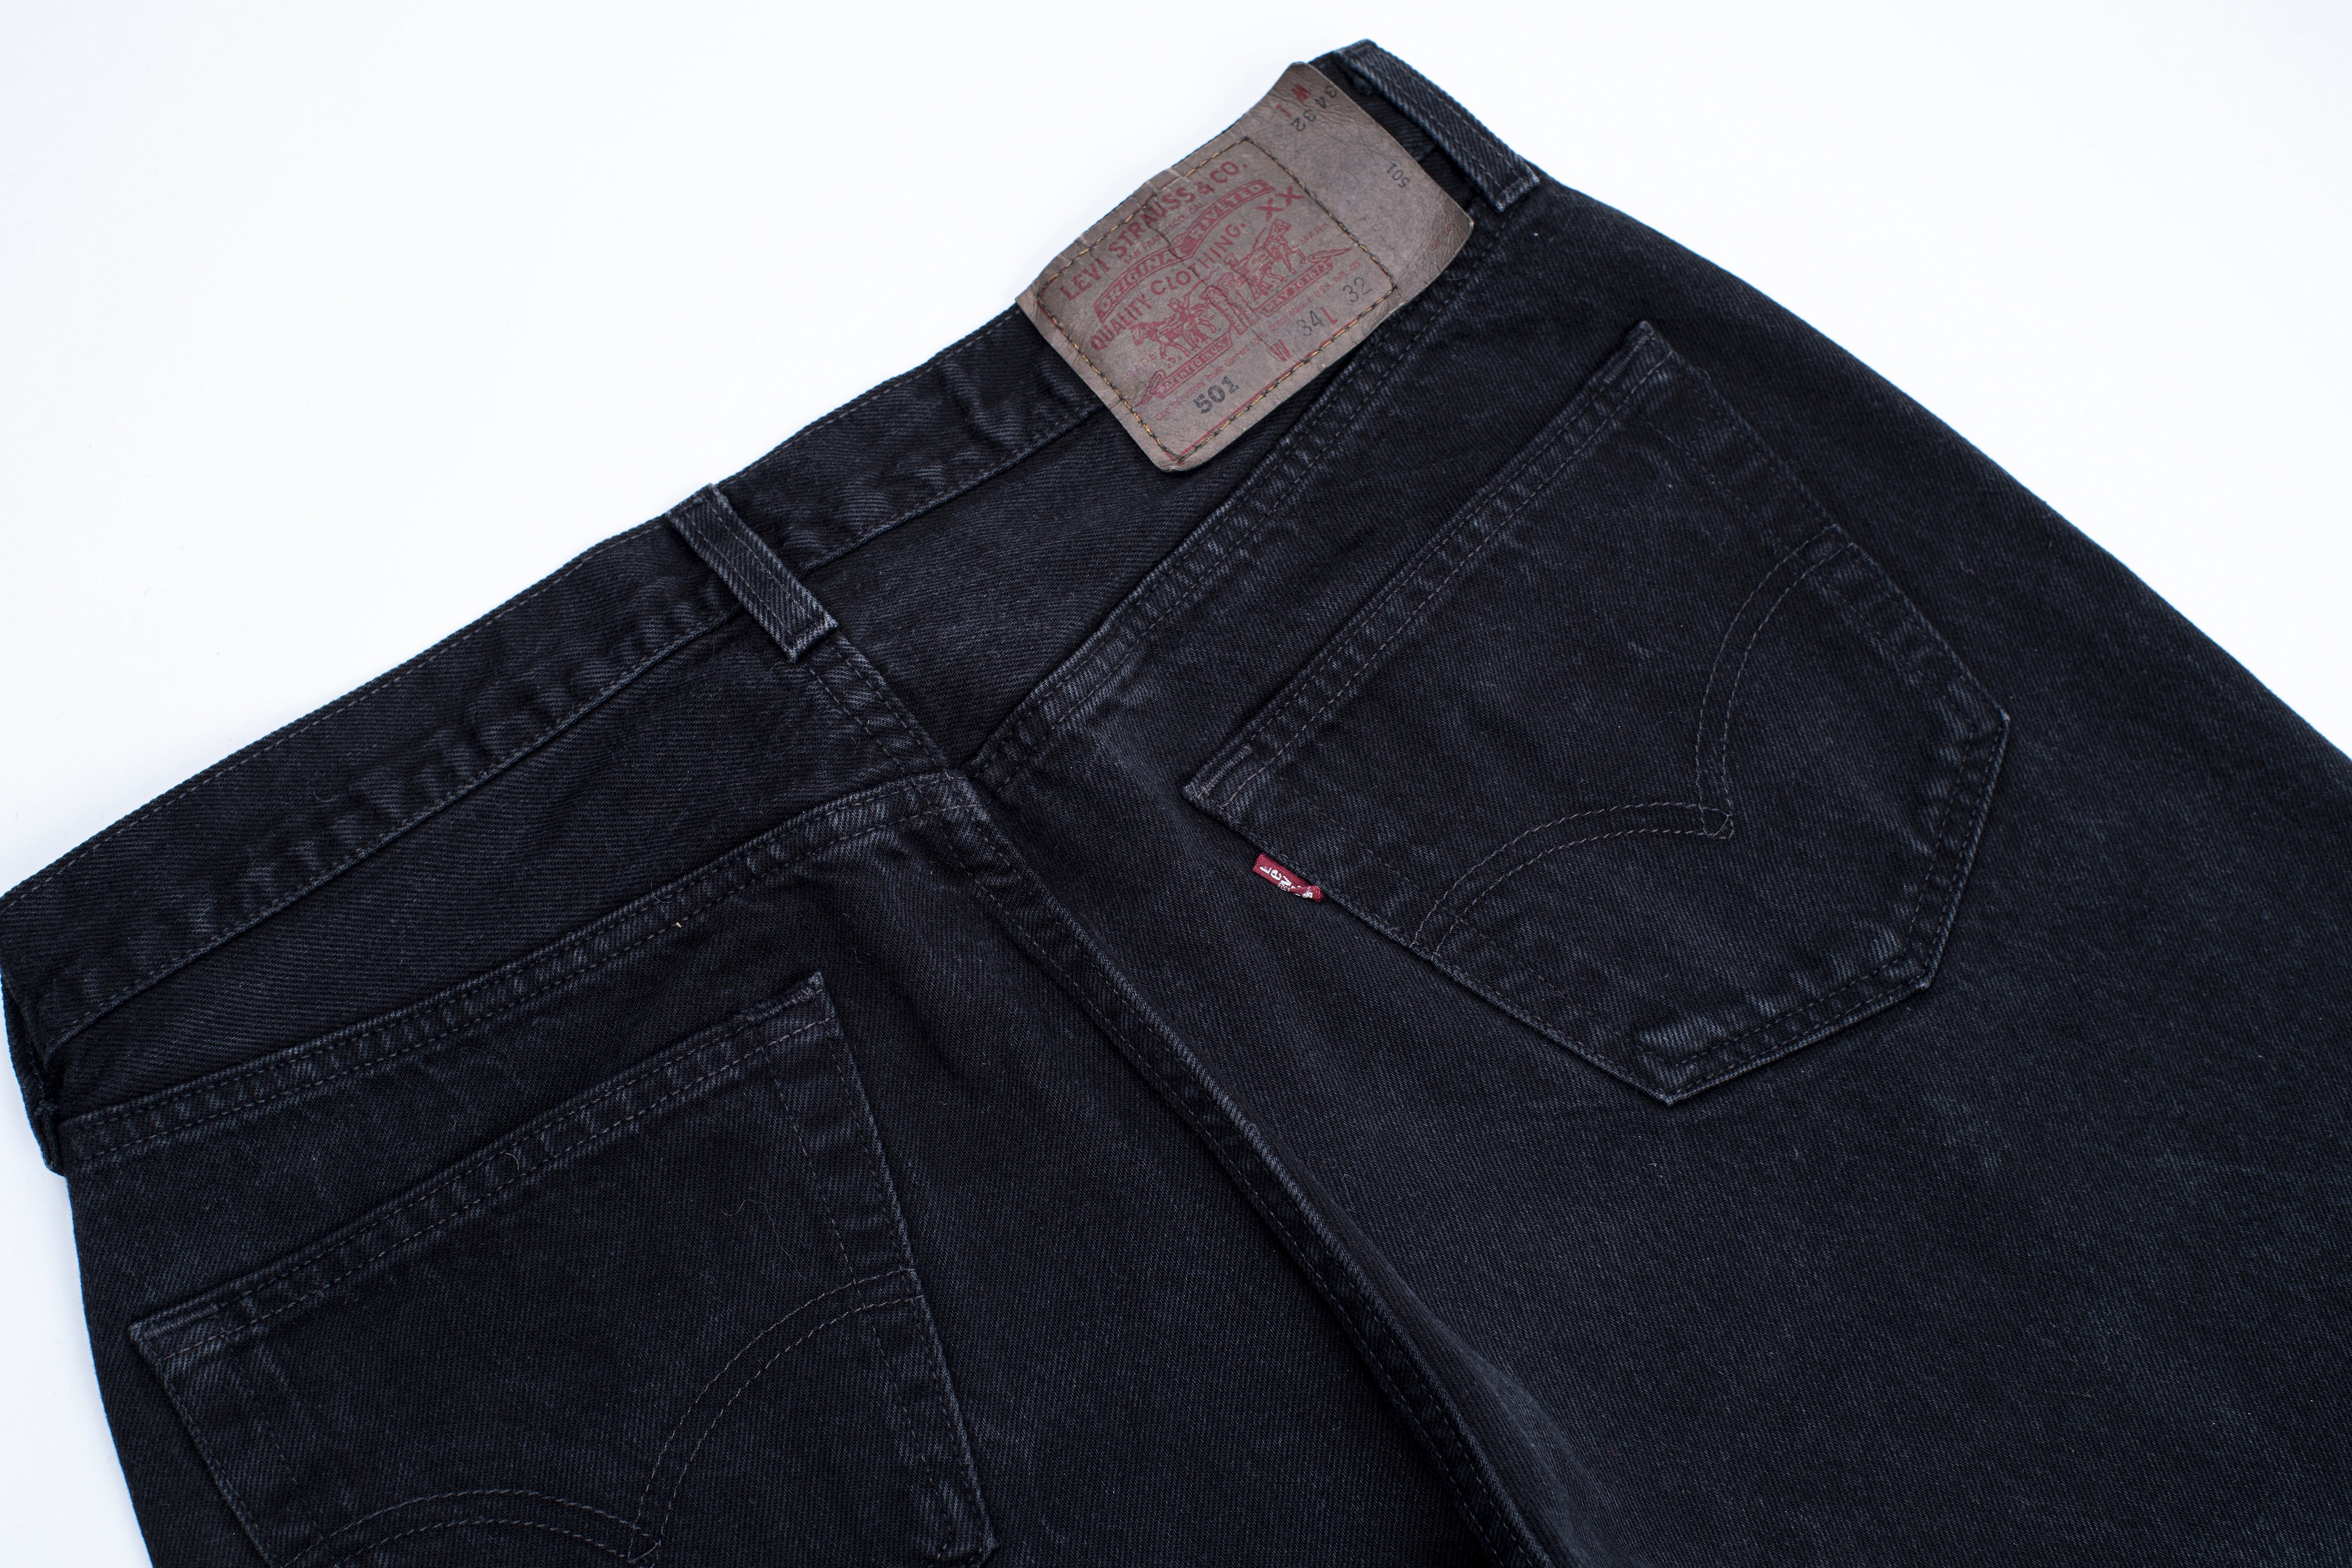 Levi’s 501 Men’s Vintage Black Jeans Made in USA, W34/L32